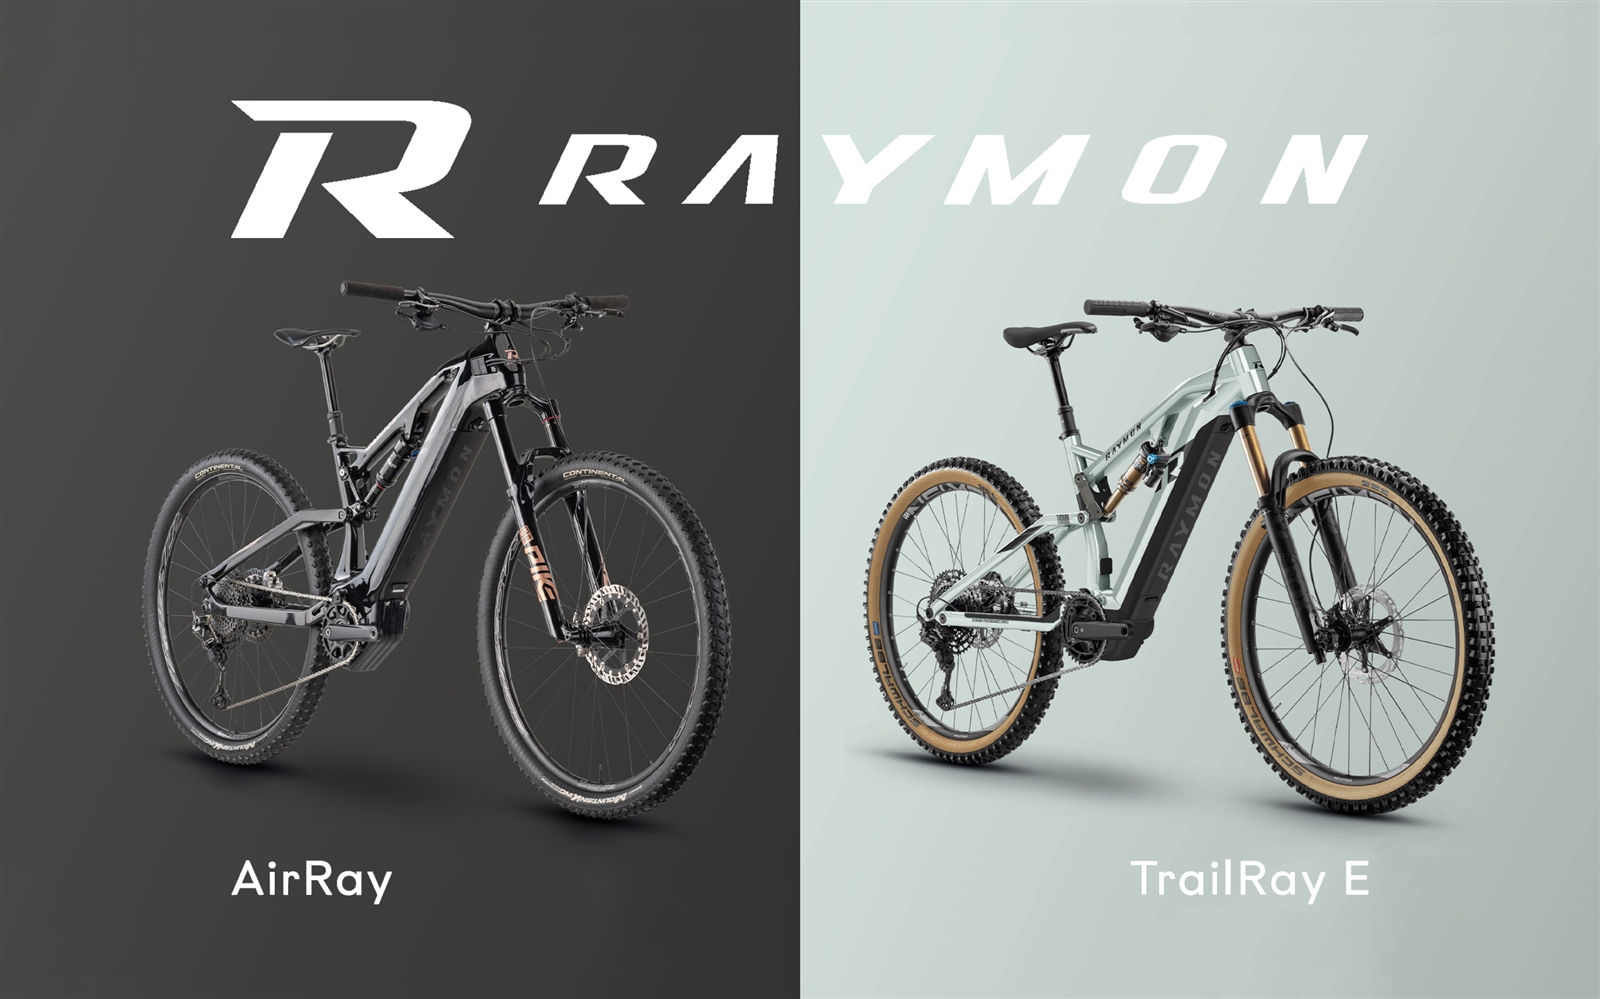 Novità R Raymon 2022 - AirRay e TrailRay